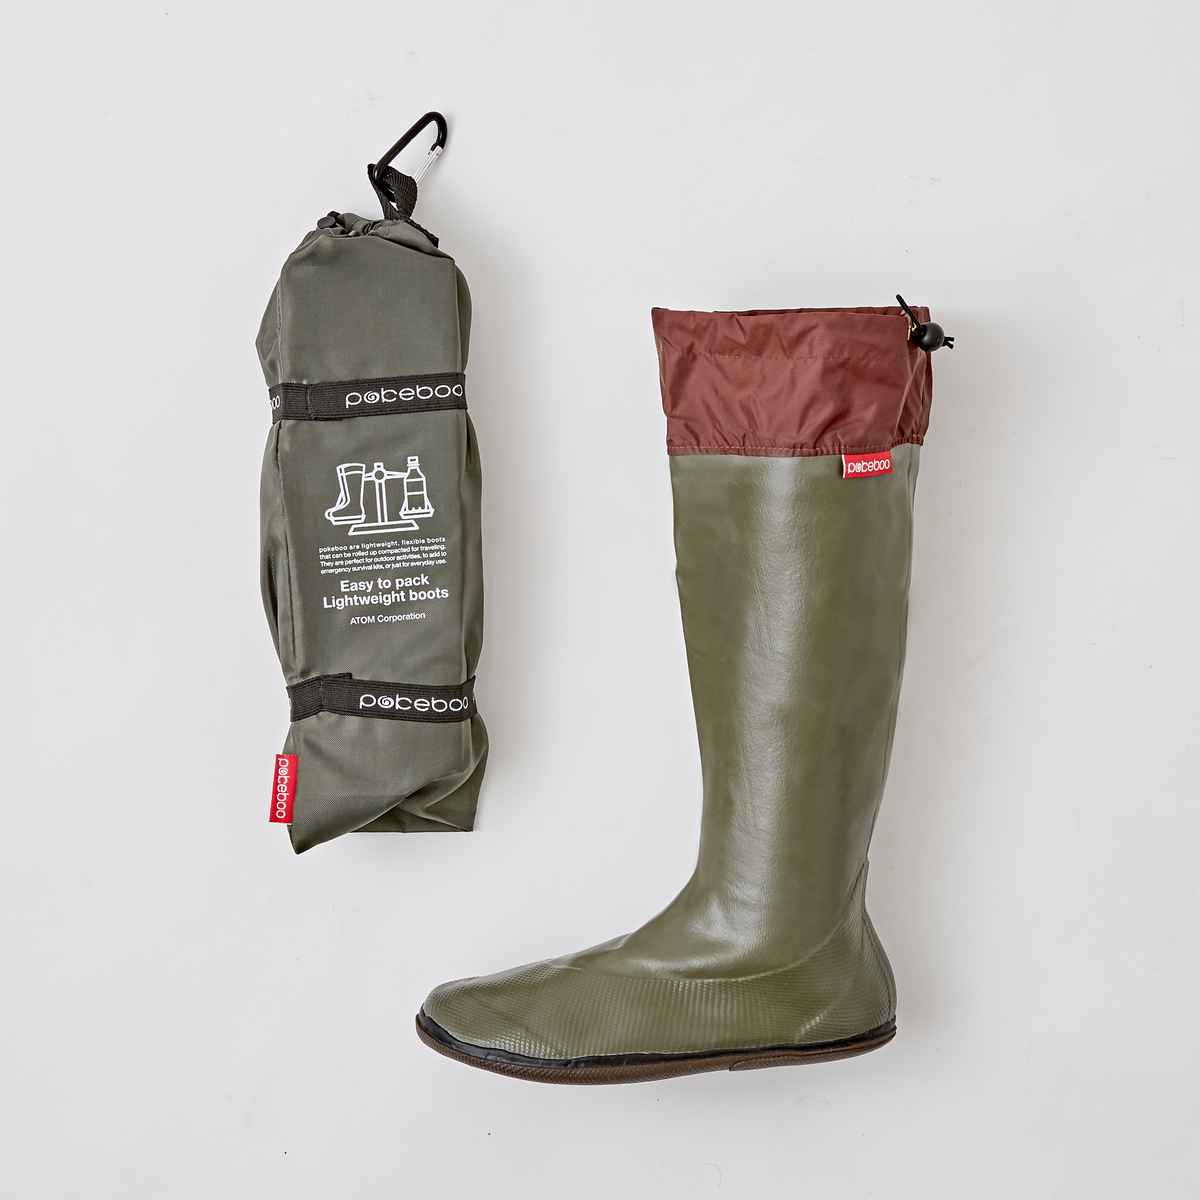 Pokeboo, Packable Rubber Rain Boots Khaki, Size, SS, Rainboots,